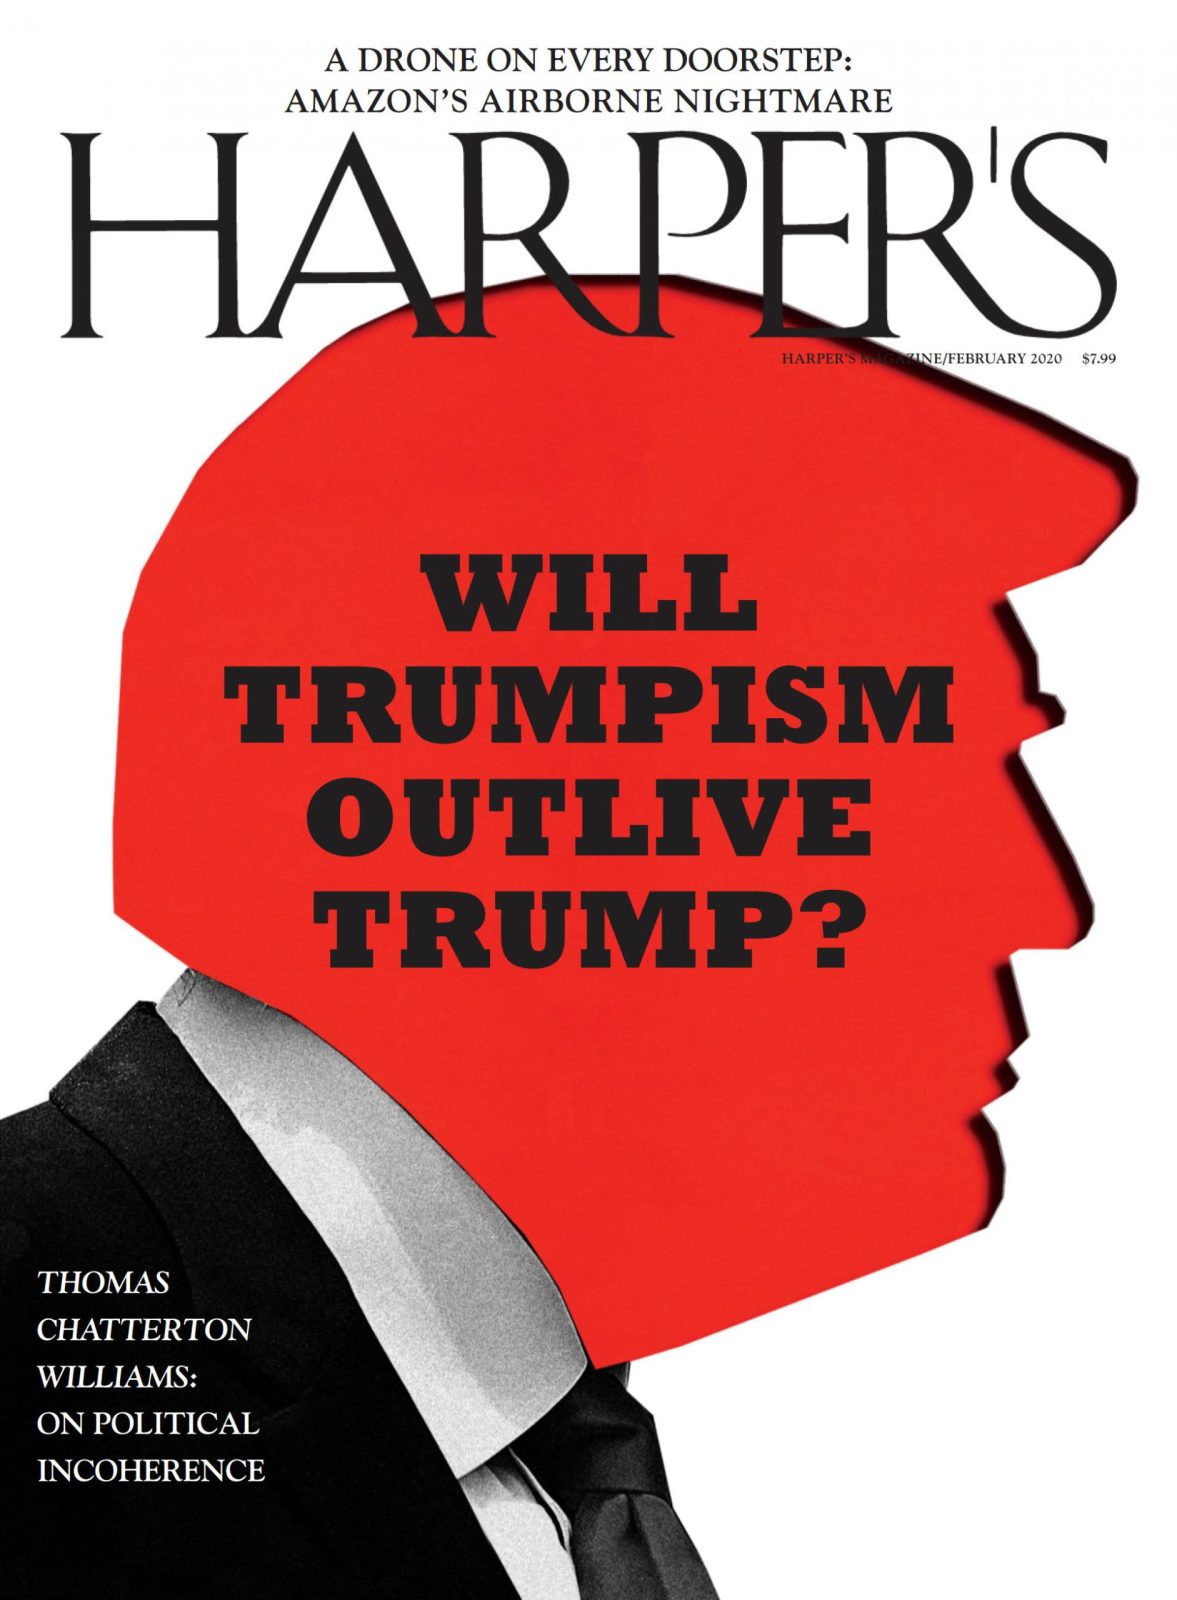 Harpers 哈珀斯杂志  FEBRUARY 2020年2月刊